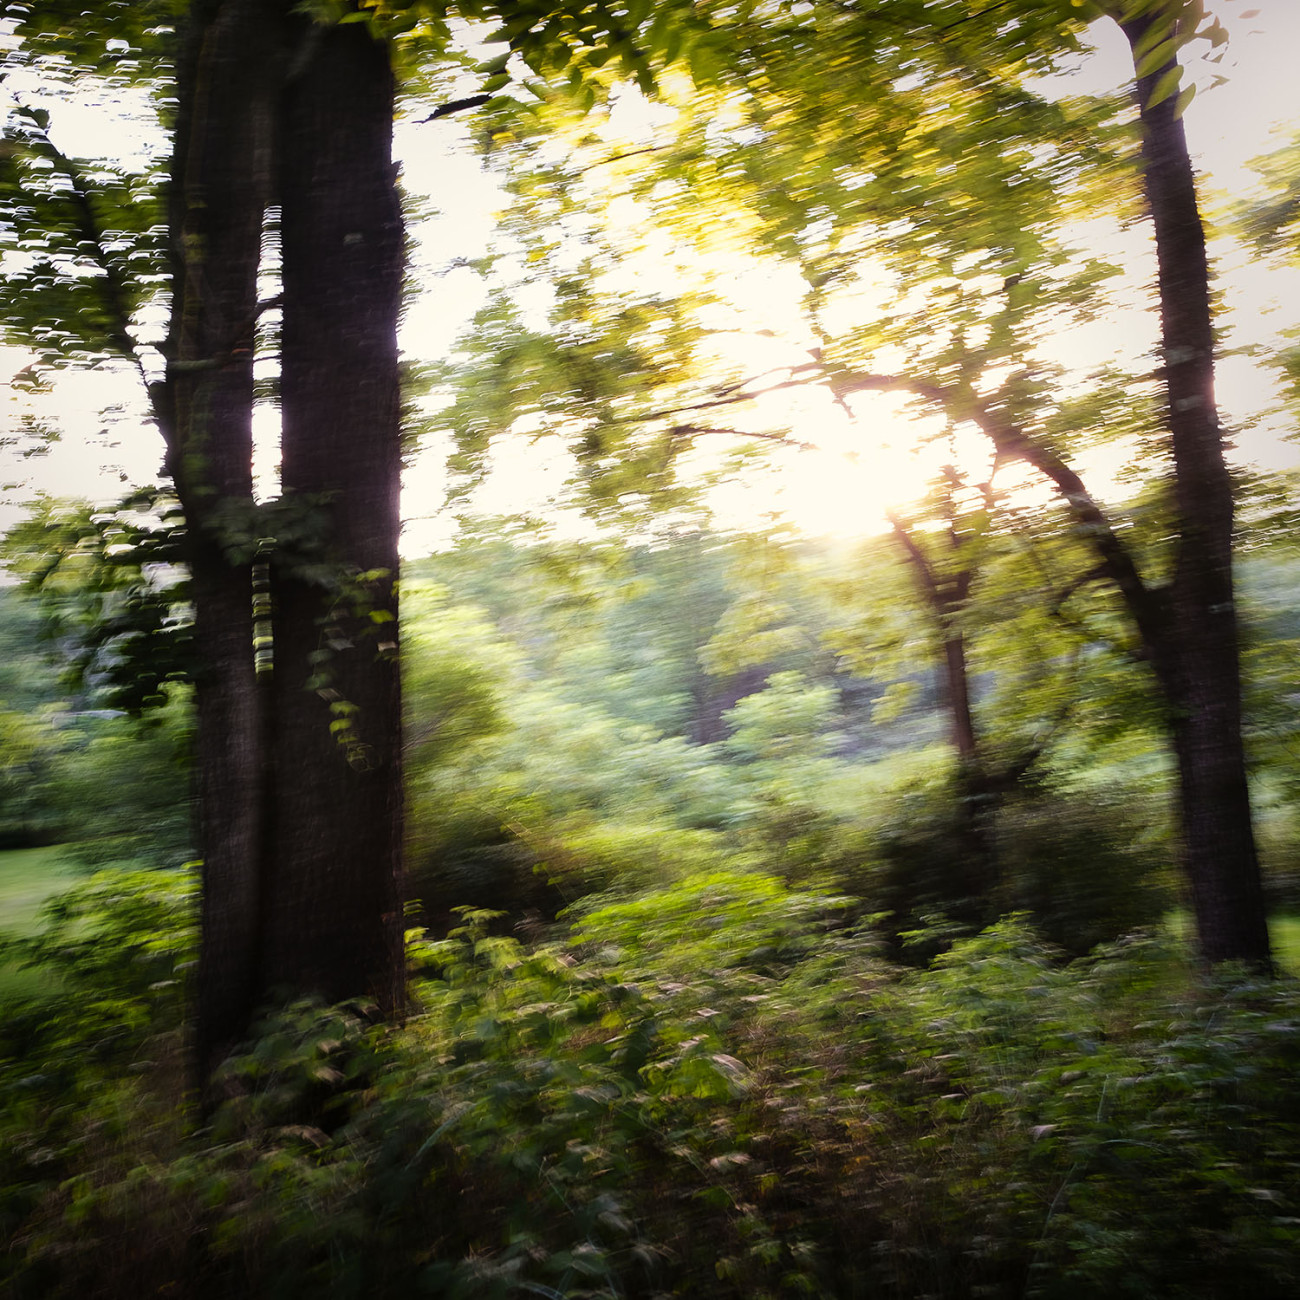 Sunset through the trees, Millbrook, 2016